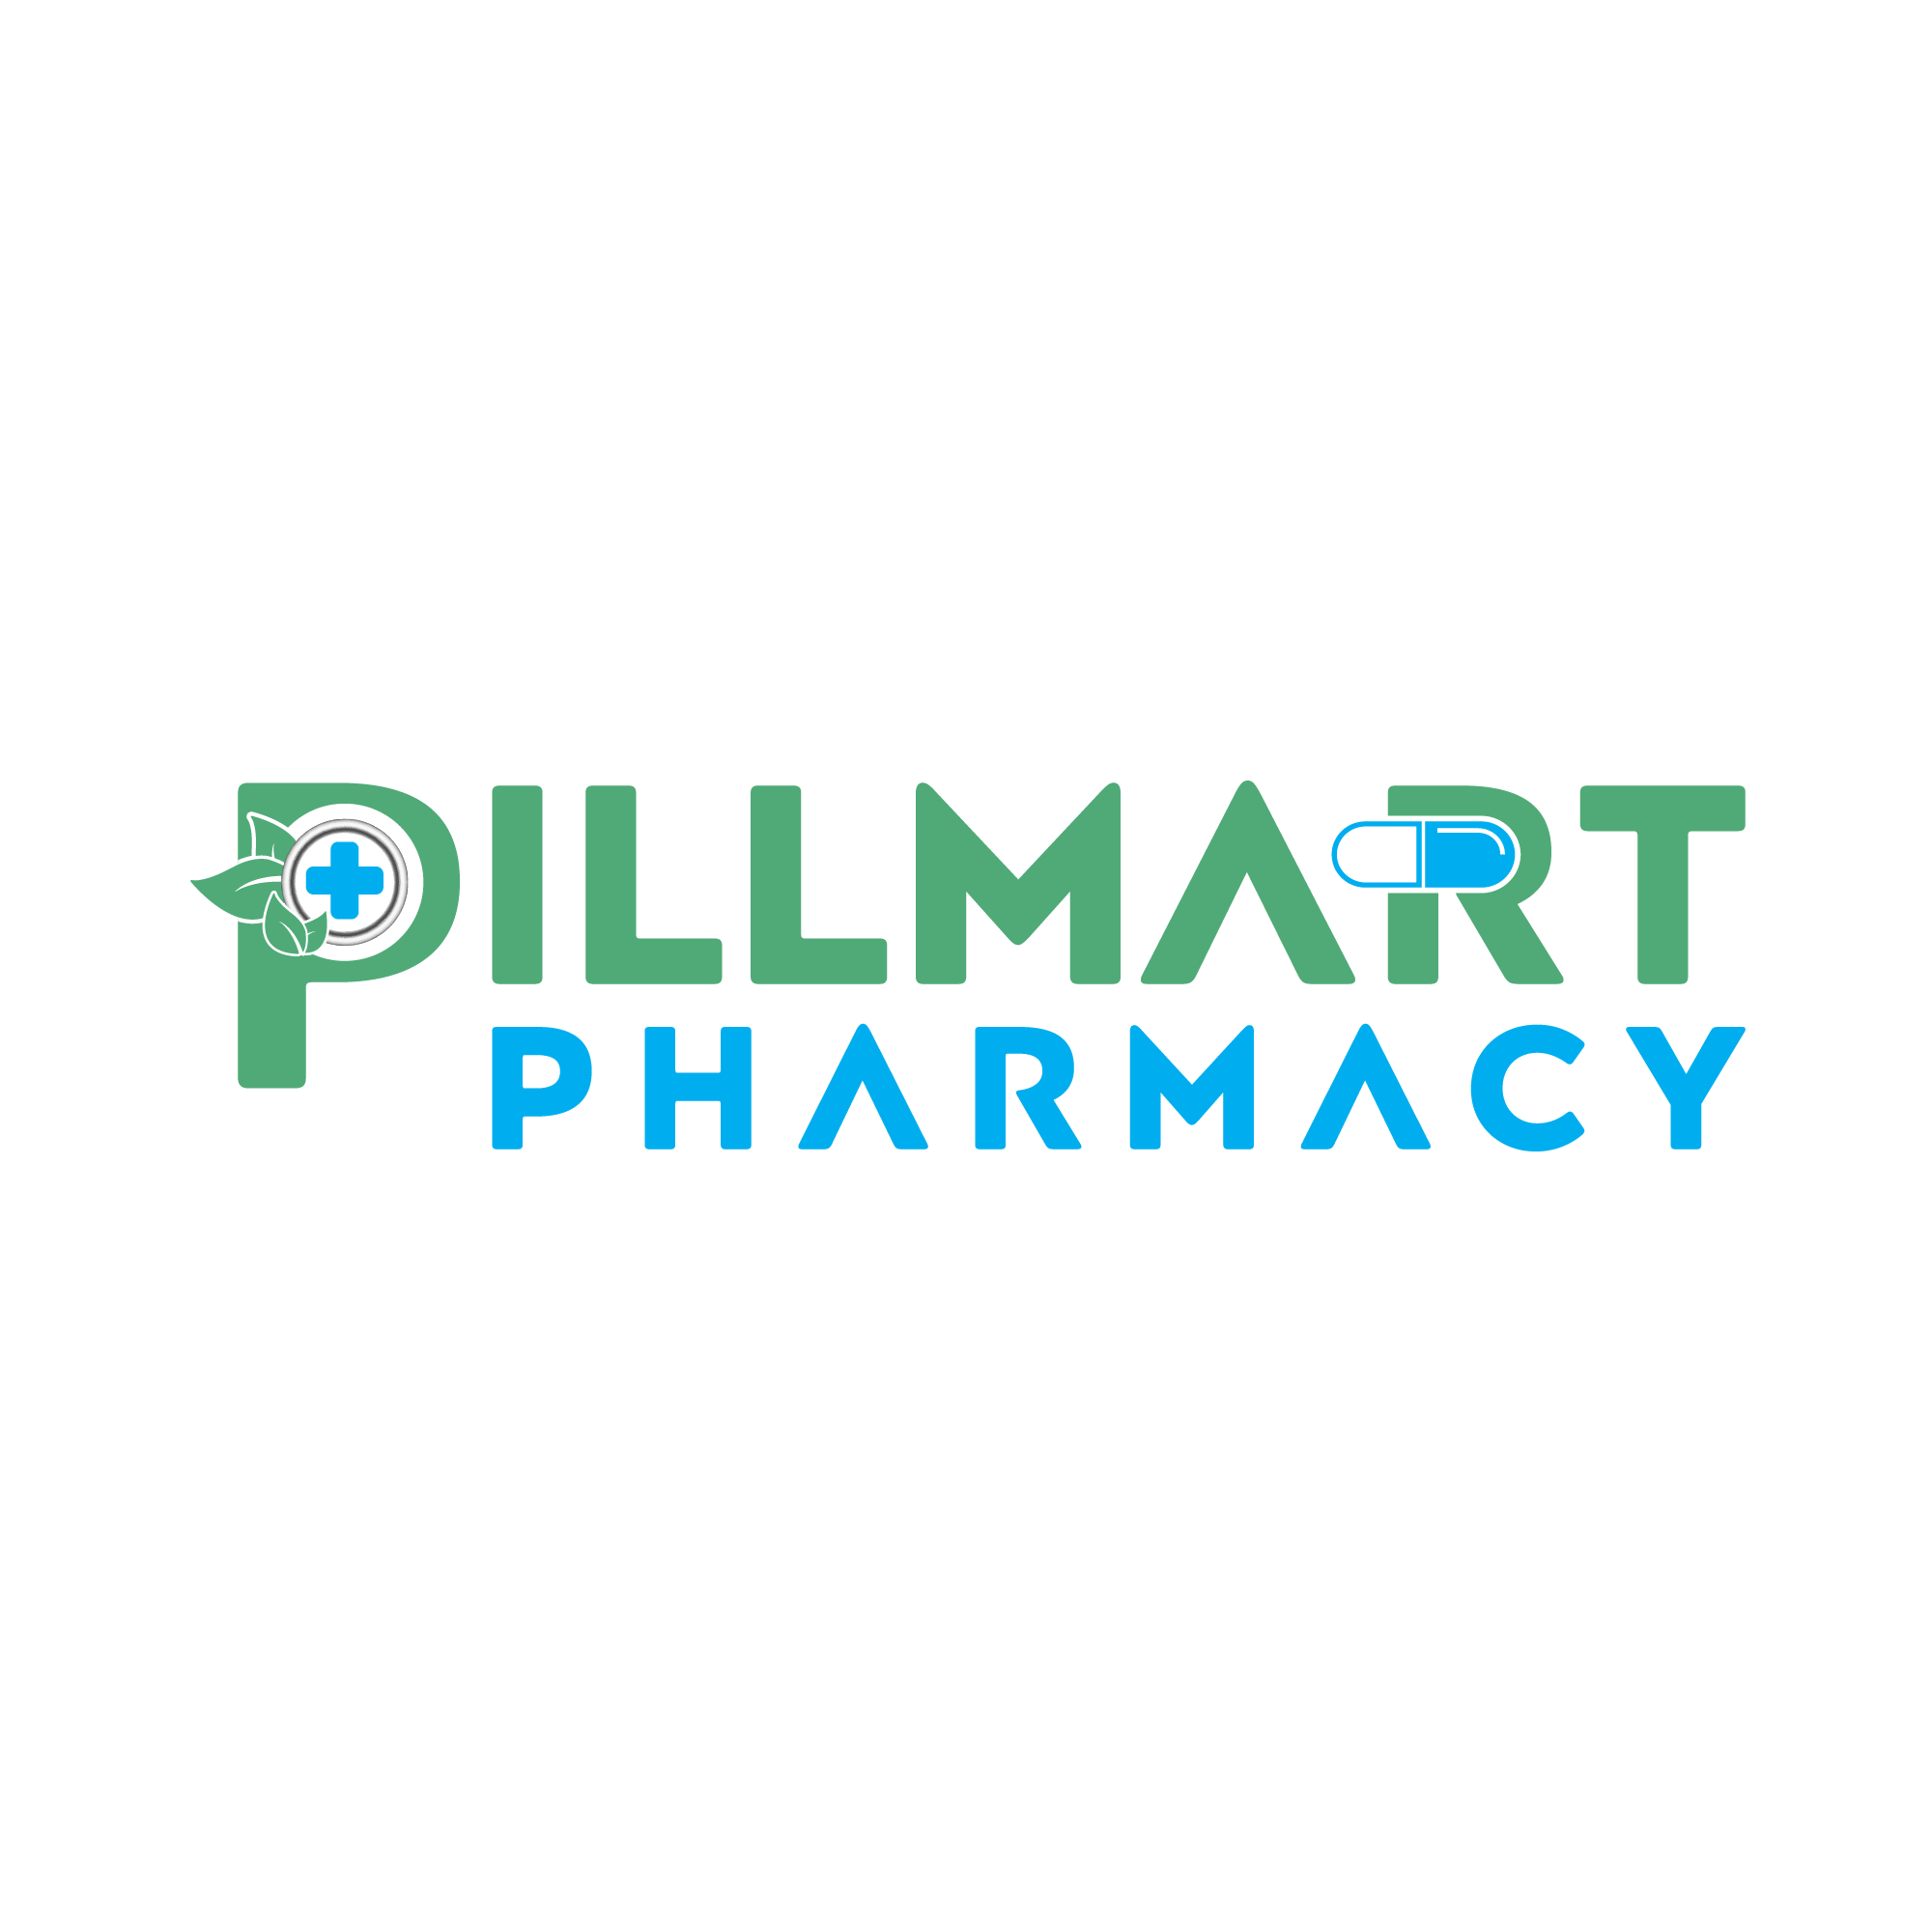 PillMart pharmacy